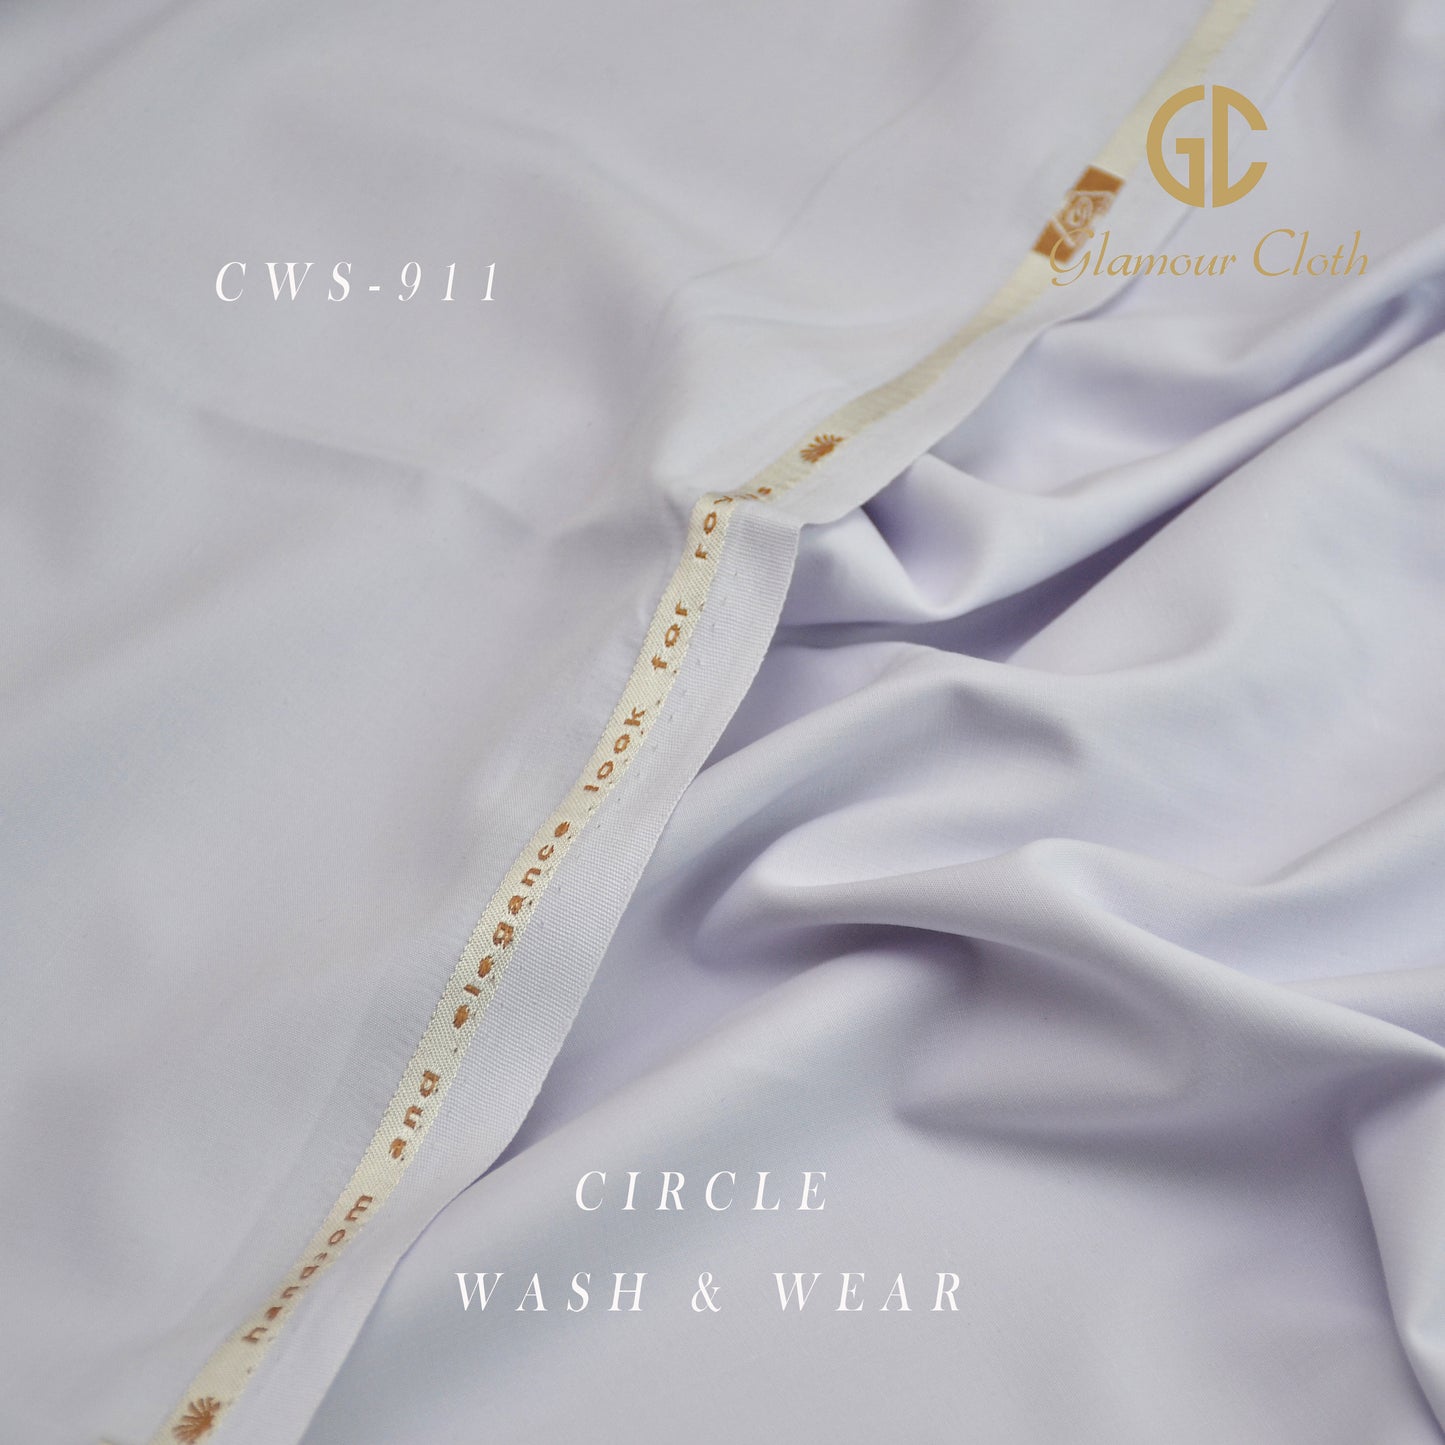 Circle - Wash & Wear CW-911